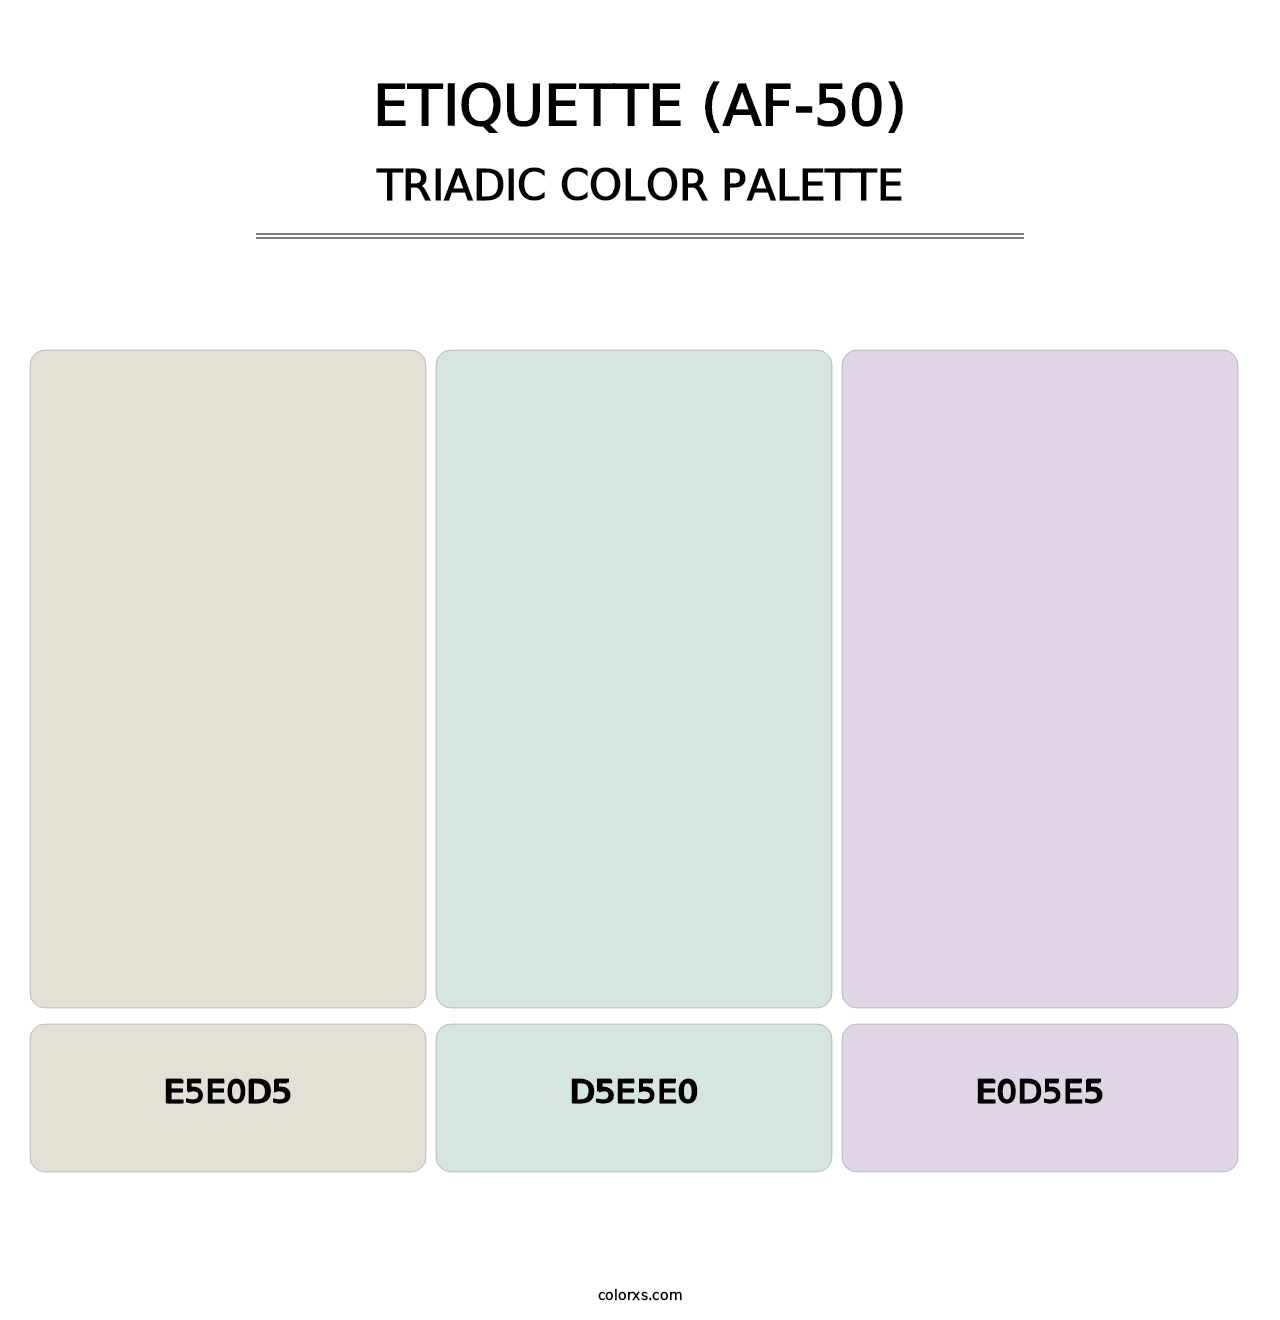 Etiquette (AF-50) - Triadic Color Palette